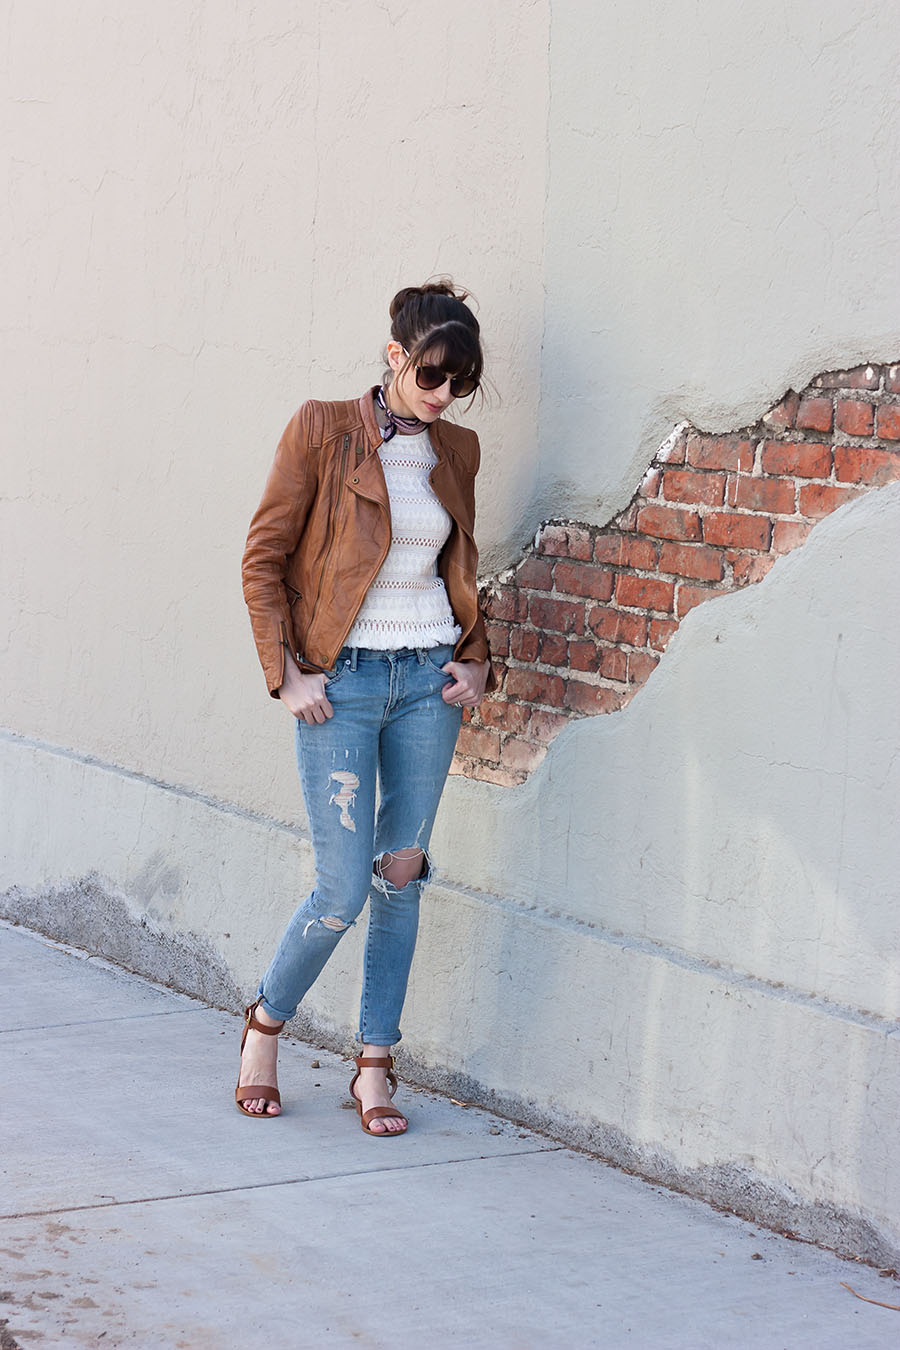 Gap Distressed Skinny Jeans, Fringe Top, Tan Leather Jacket